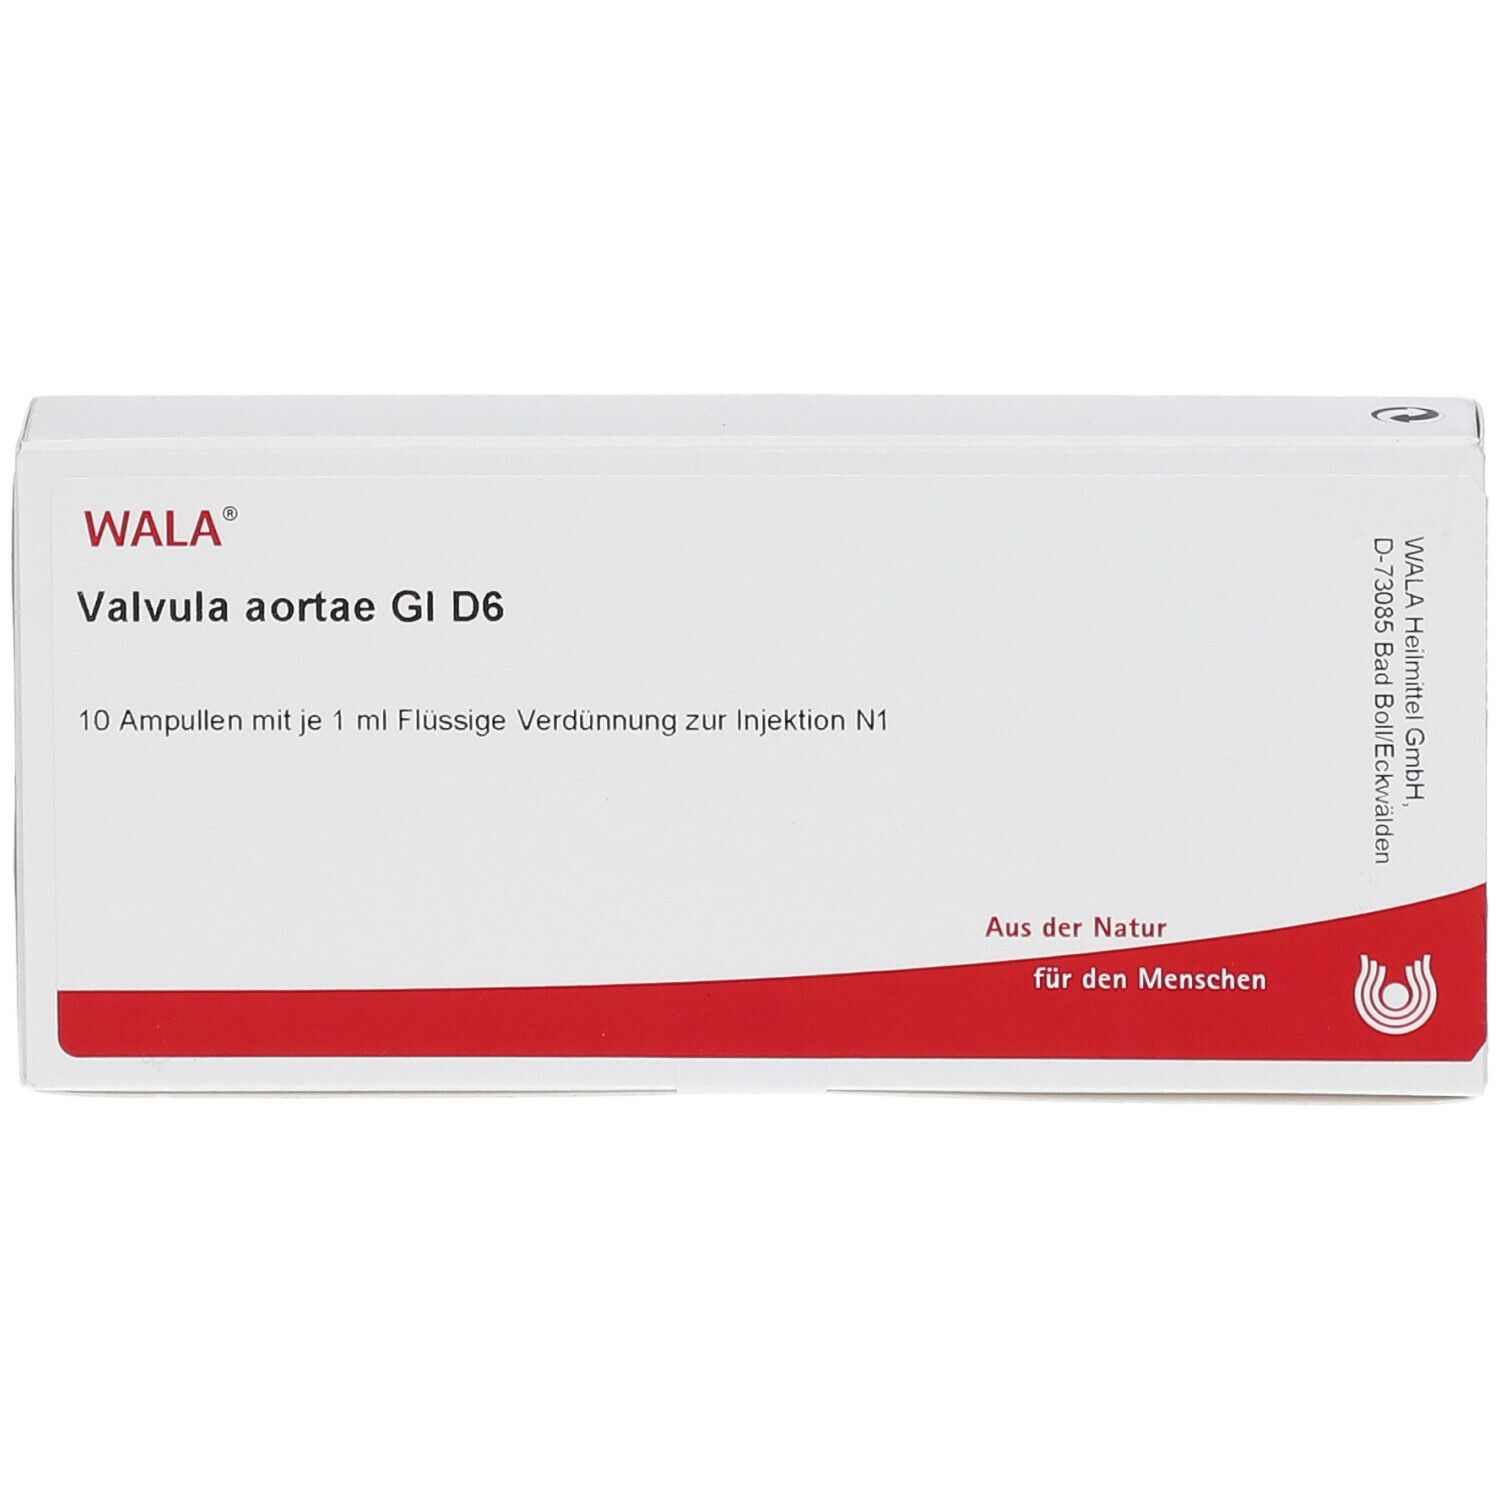 WALA® Valvula aortae Gl D 6